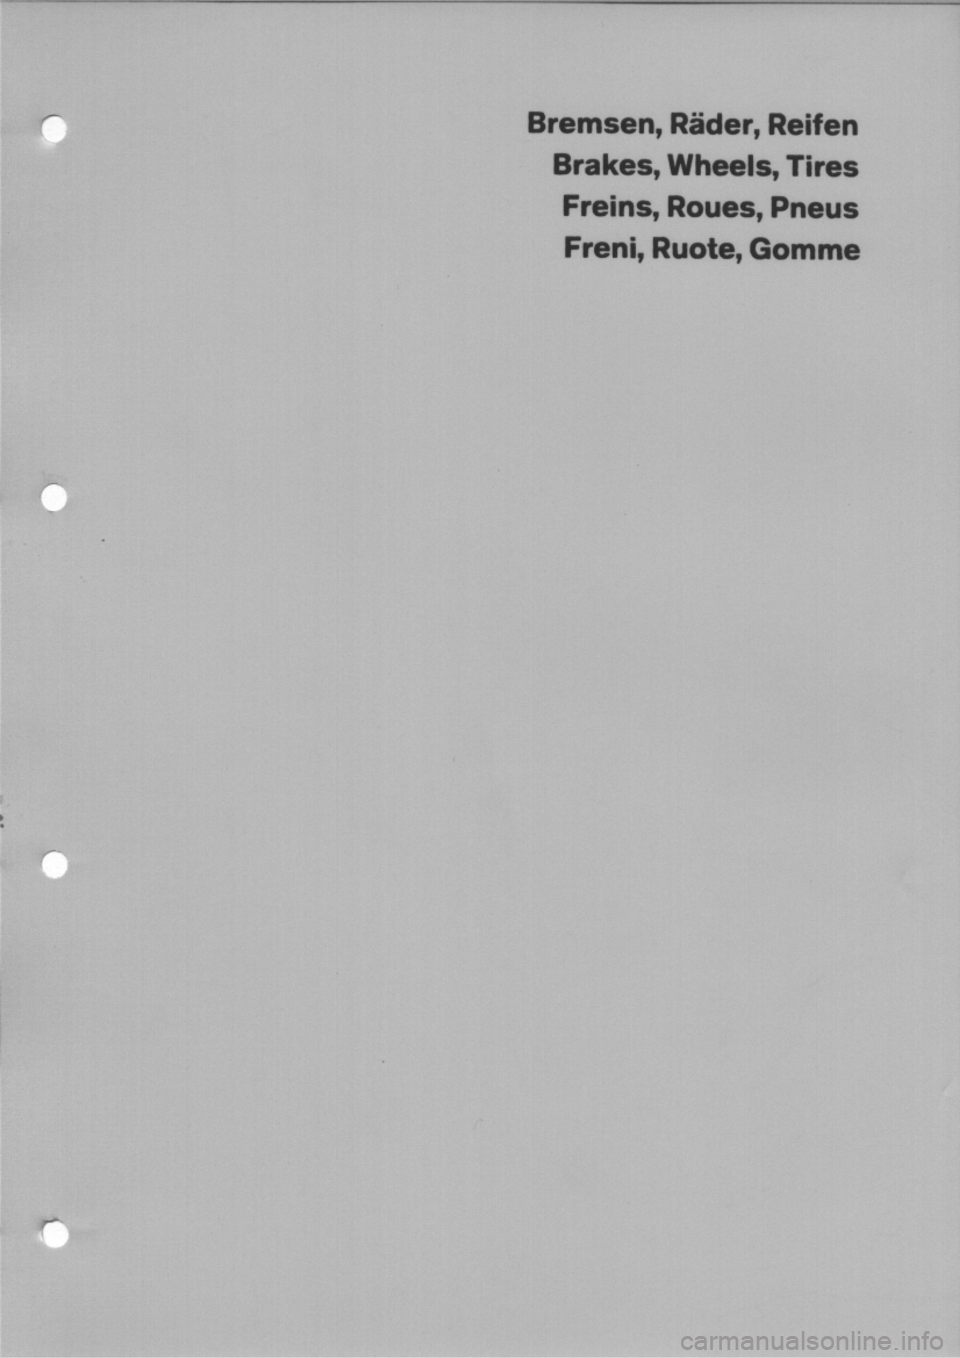 PORSCHE 914 1976 1.G Brakes Workshop Manual 